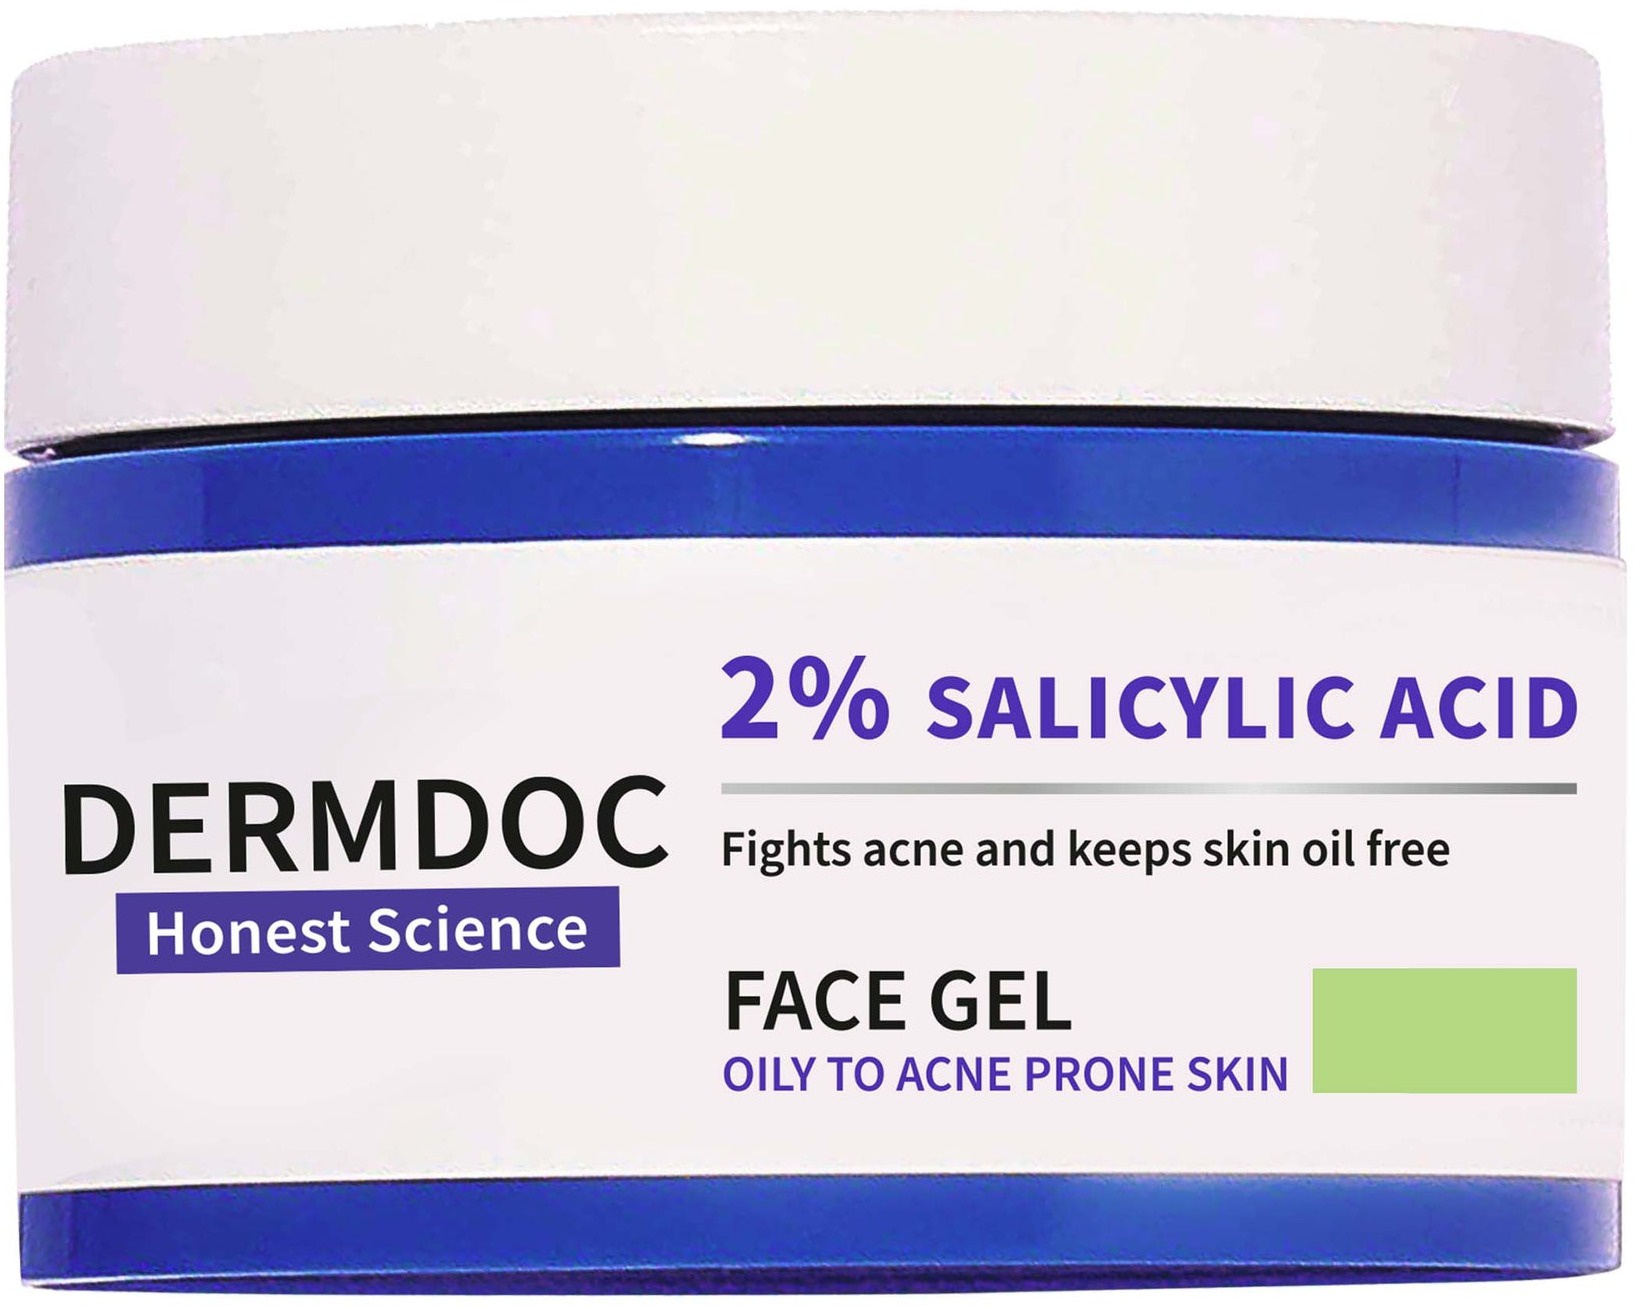 DERMDOC Honest Science 2% Salicylic Acid Face Gel